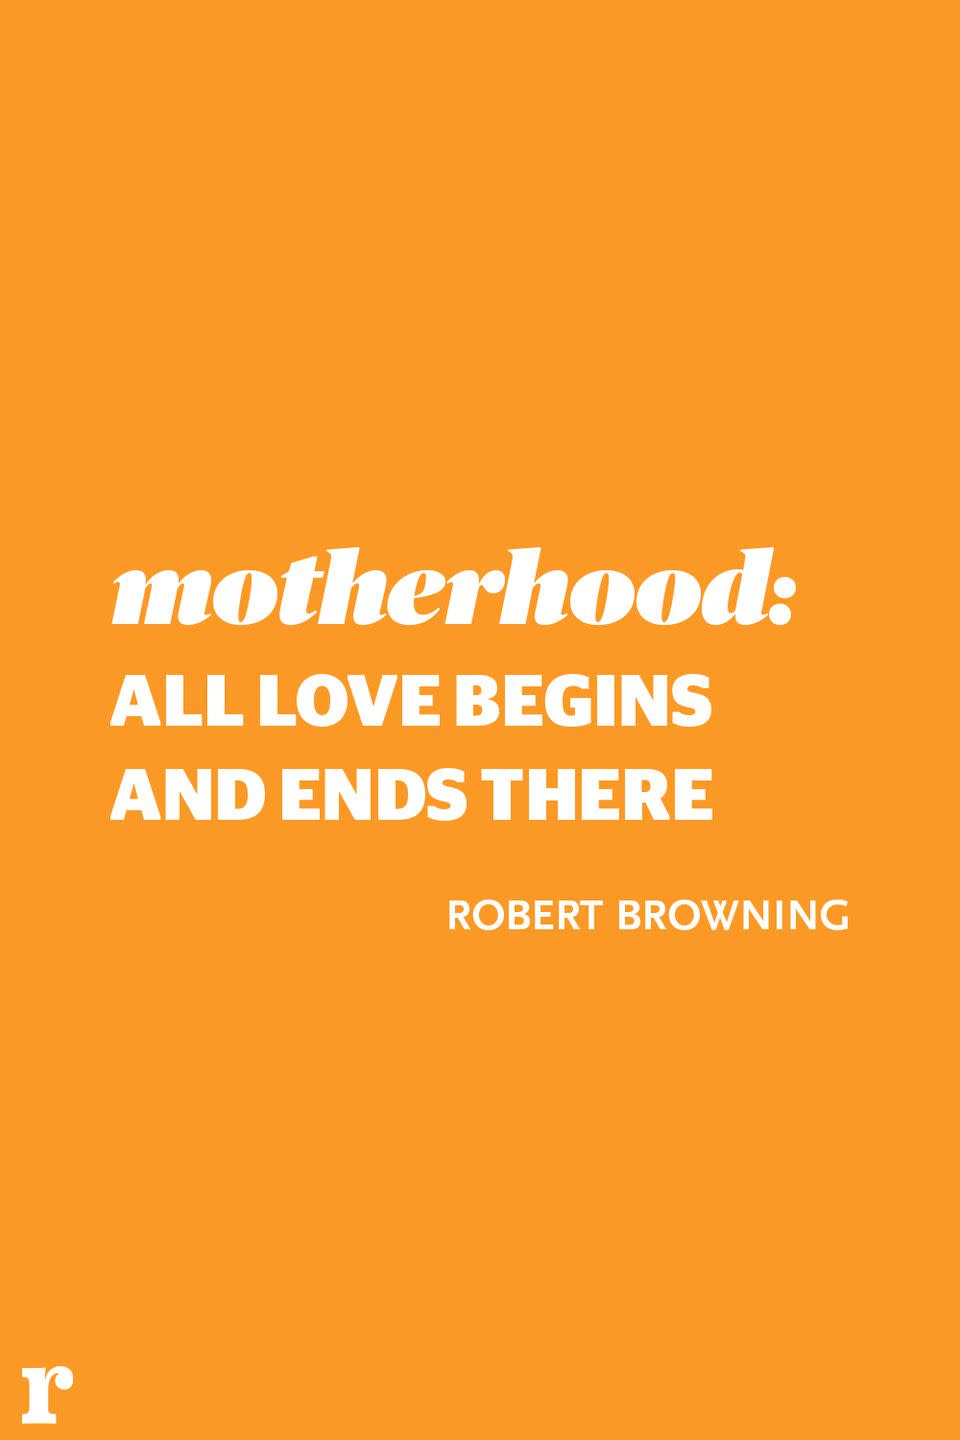 <p>"Motherhood: All love begins there."</p><p> <em> - Robert Browning</em></p>